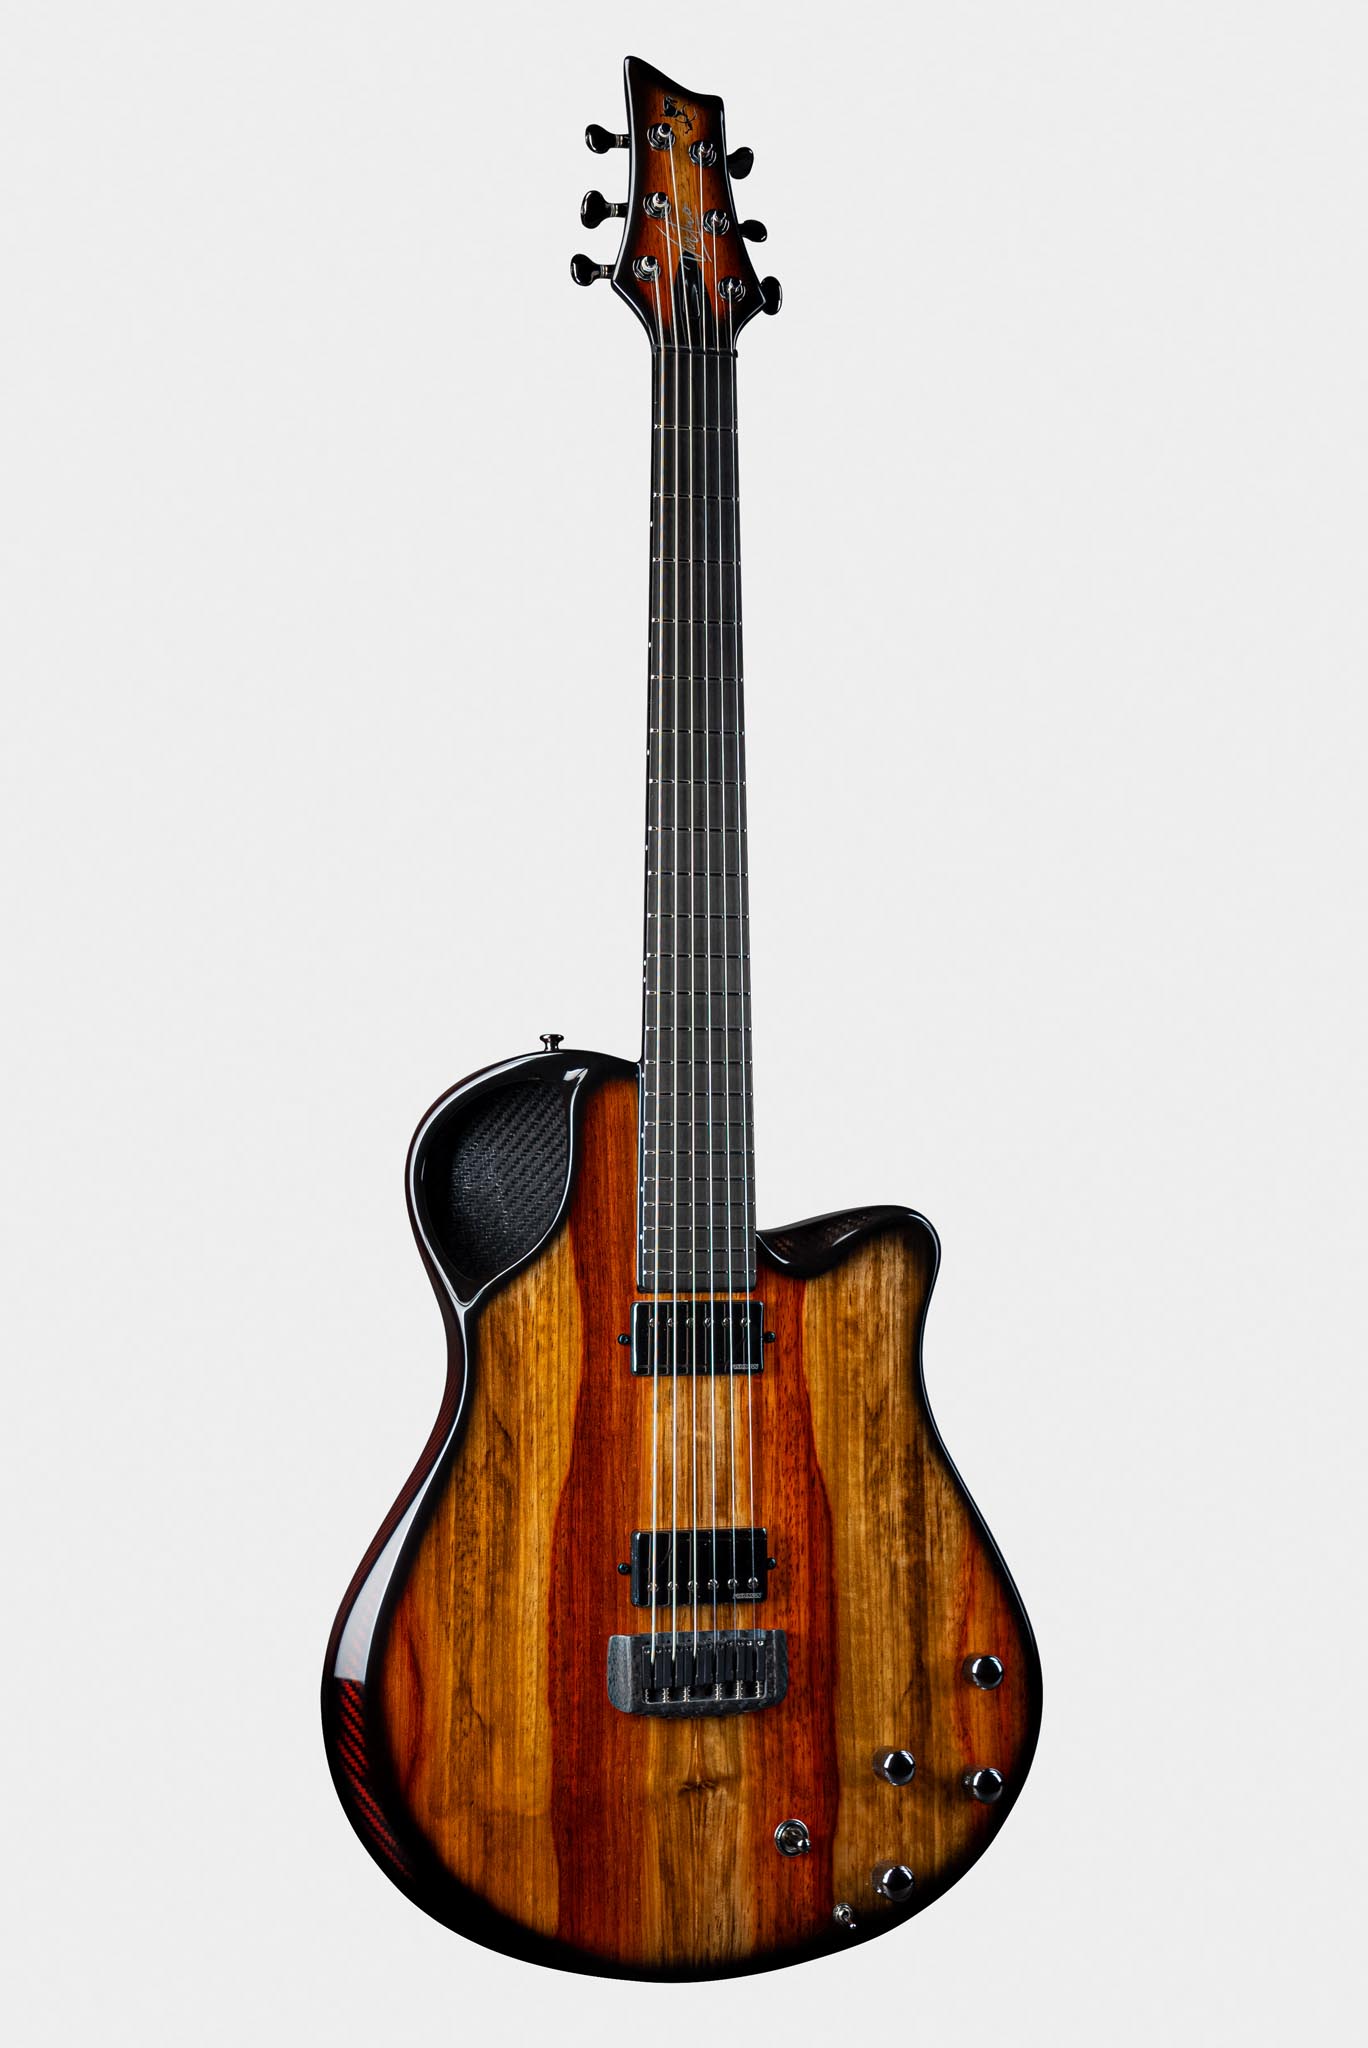 Emerald Guitars Virtuo model with distinctive Padauk wood finish